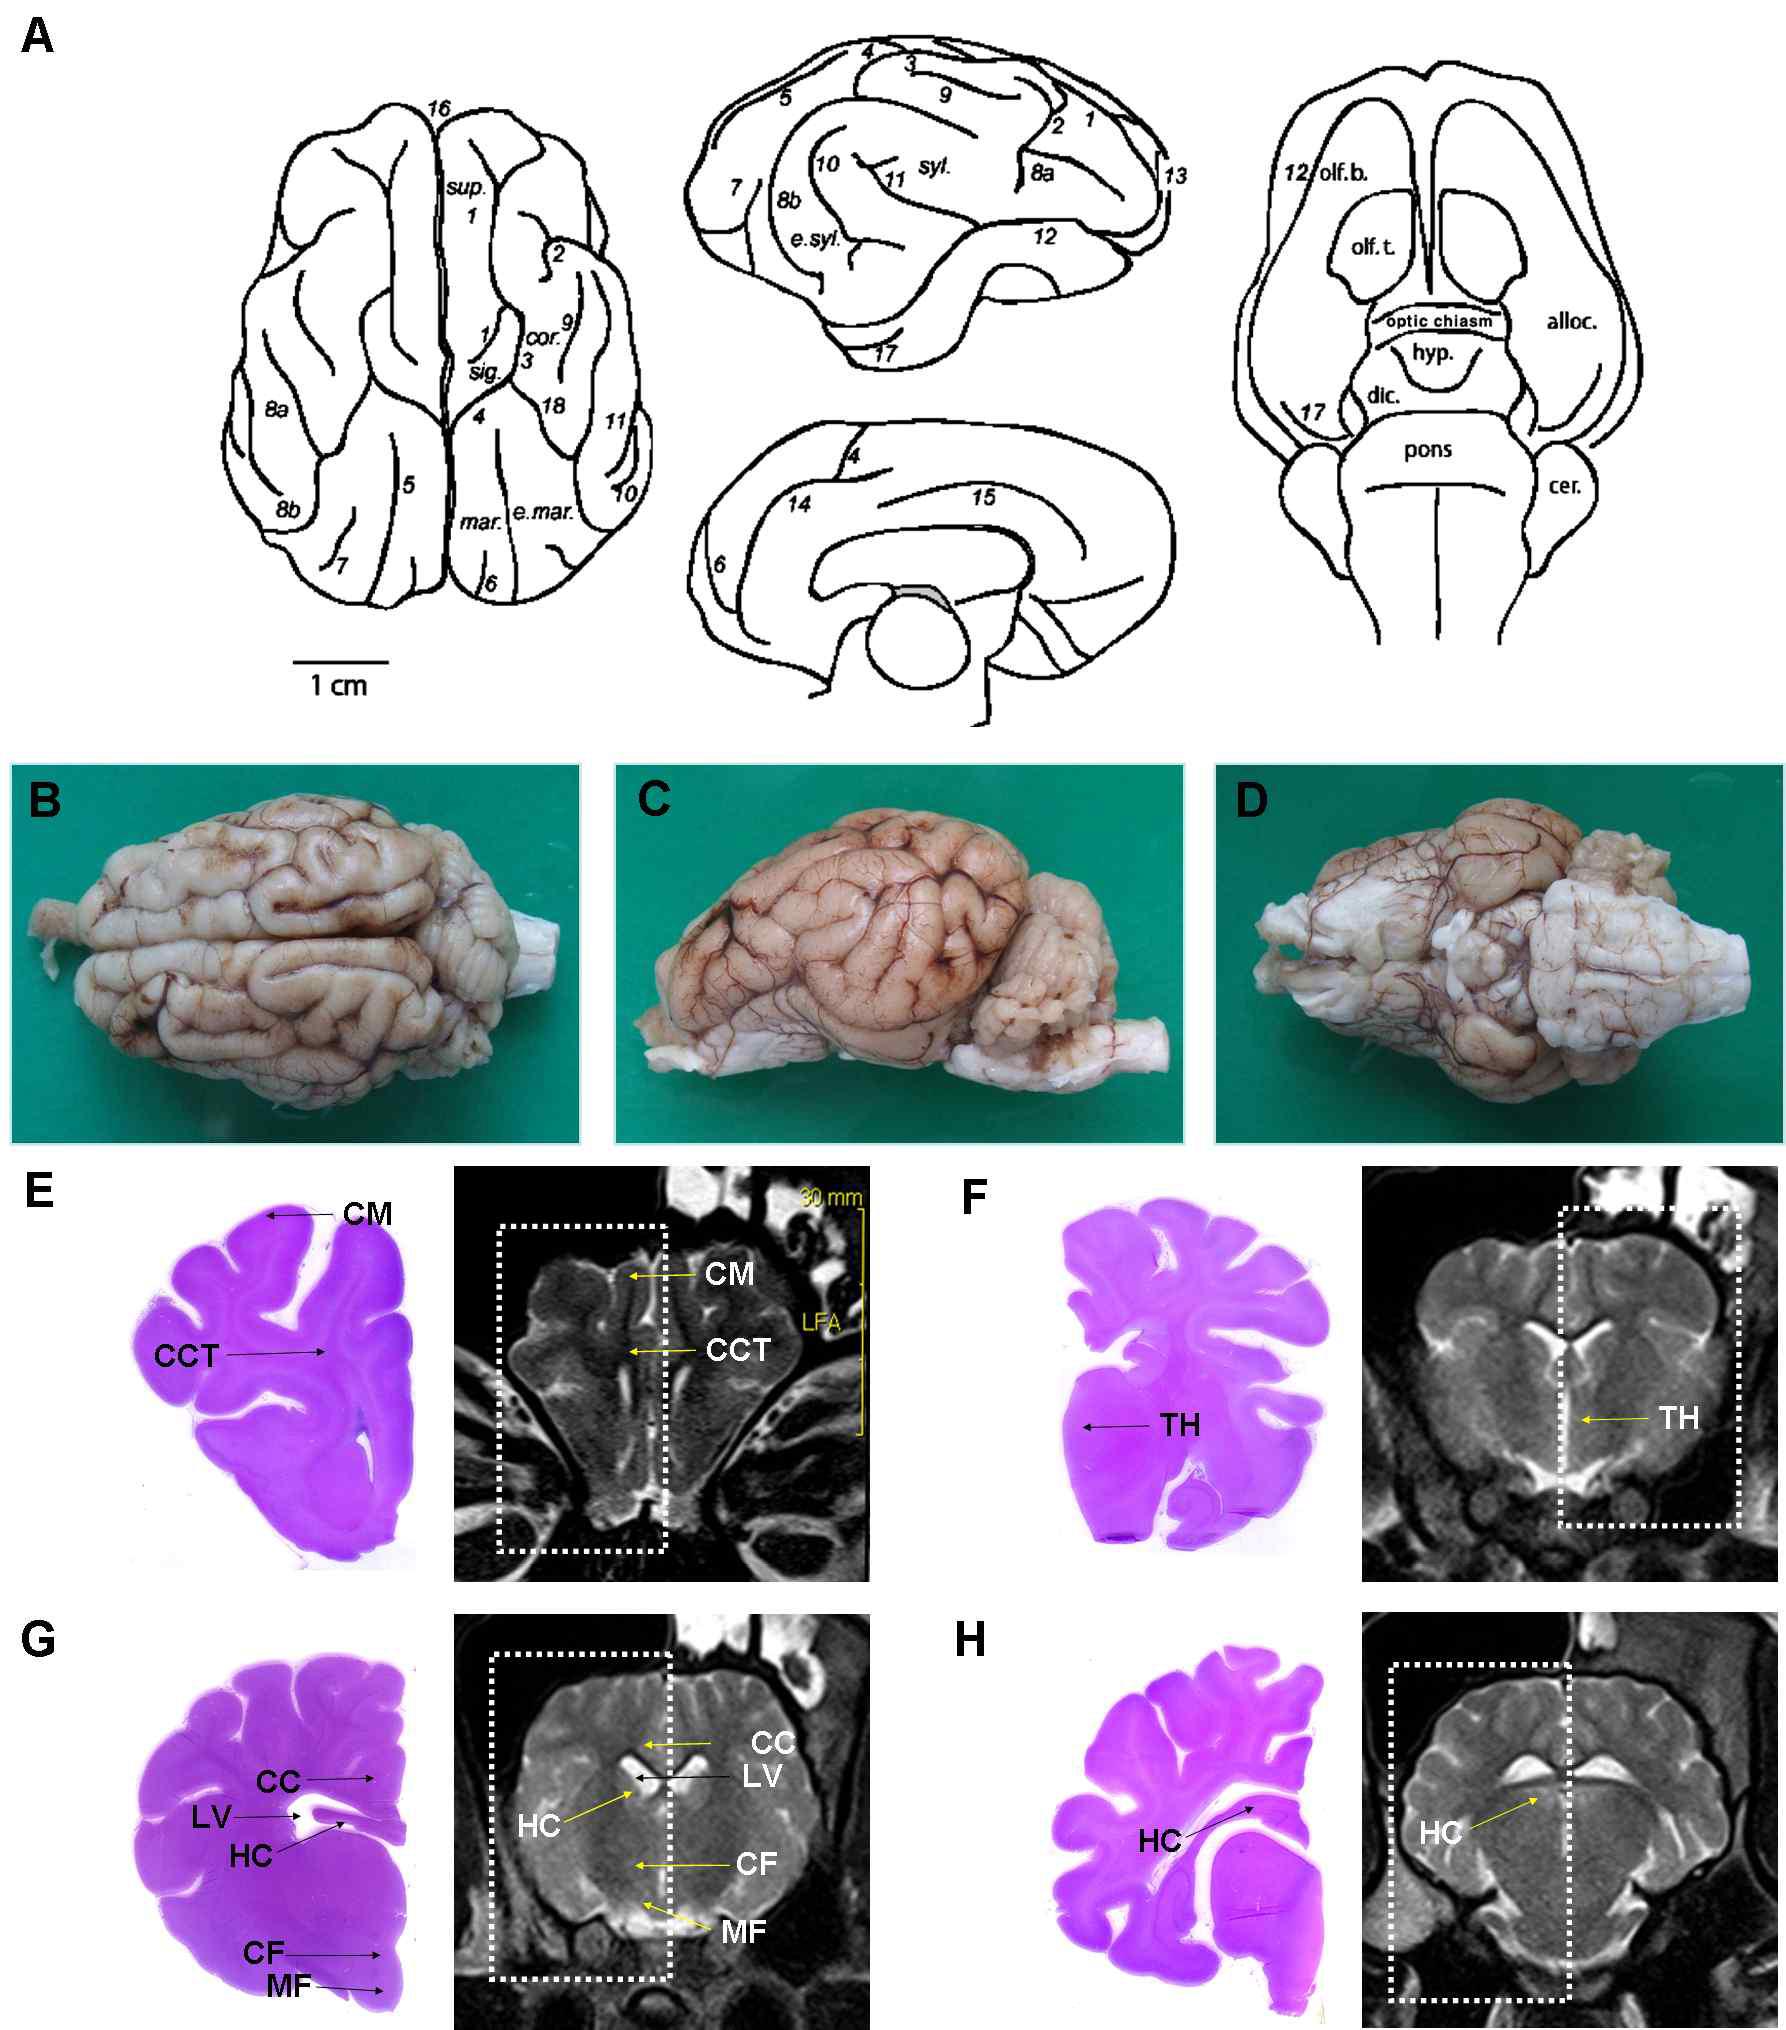 (A) 미니돼지 뇌의 모식도, (B) 앞쪽, (C) 외측, 그리고 (D) 아래쪽 뇌의 해부학적 구조. (E-H) 정상 미니돼지 뇌의 조직학적 사진 및 자기공명영상의 비교